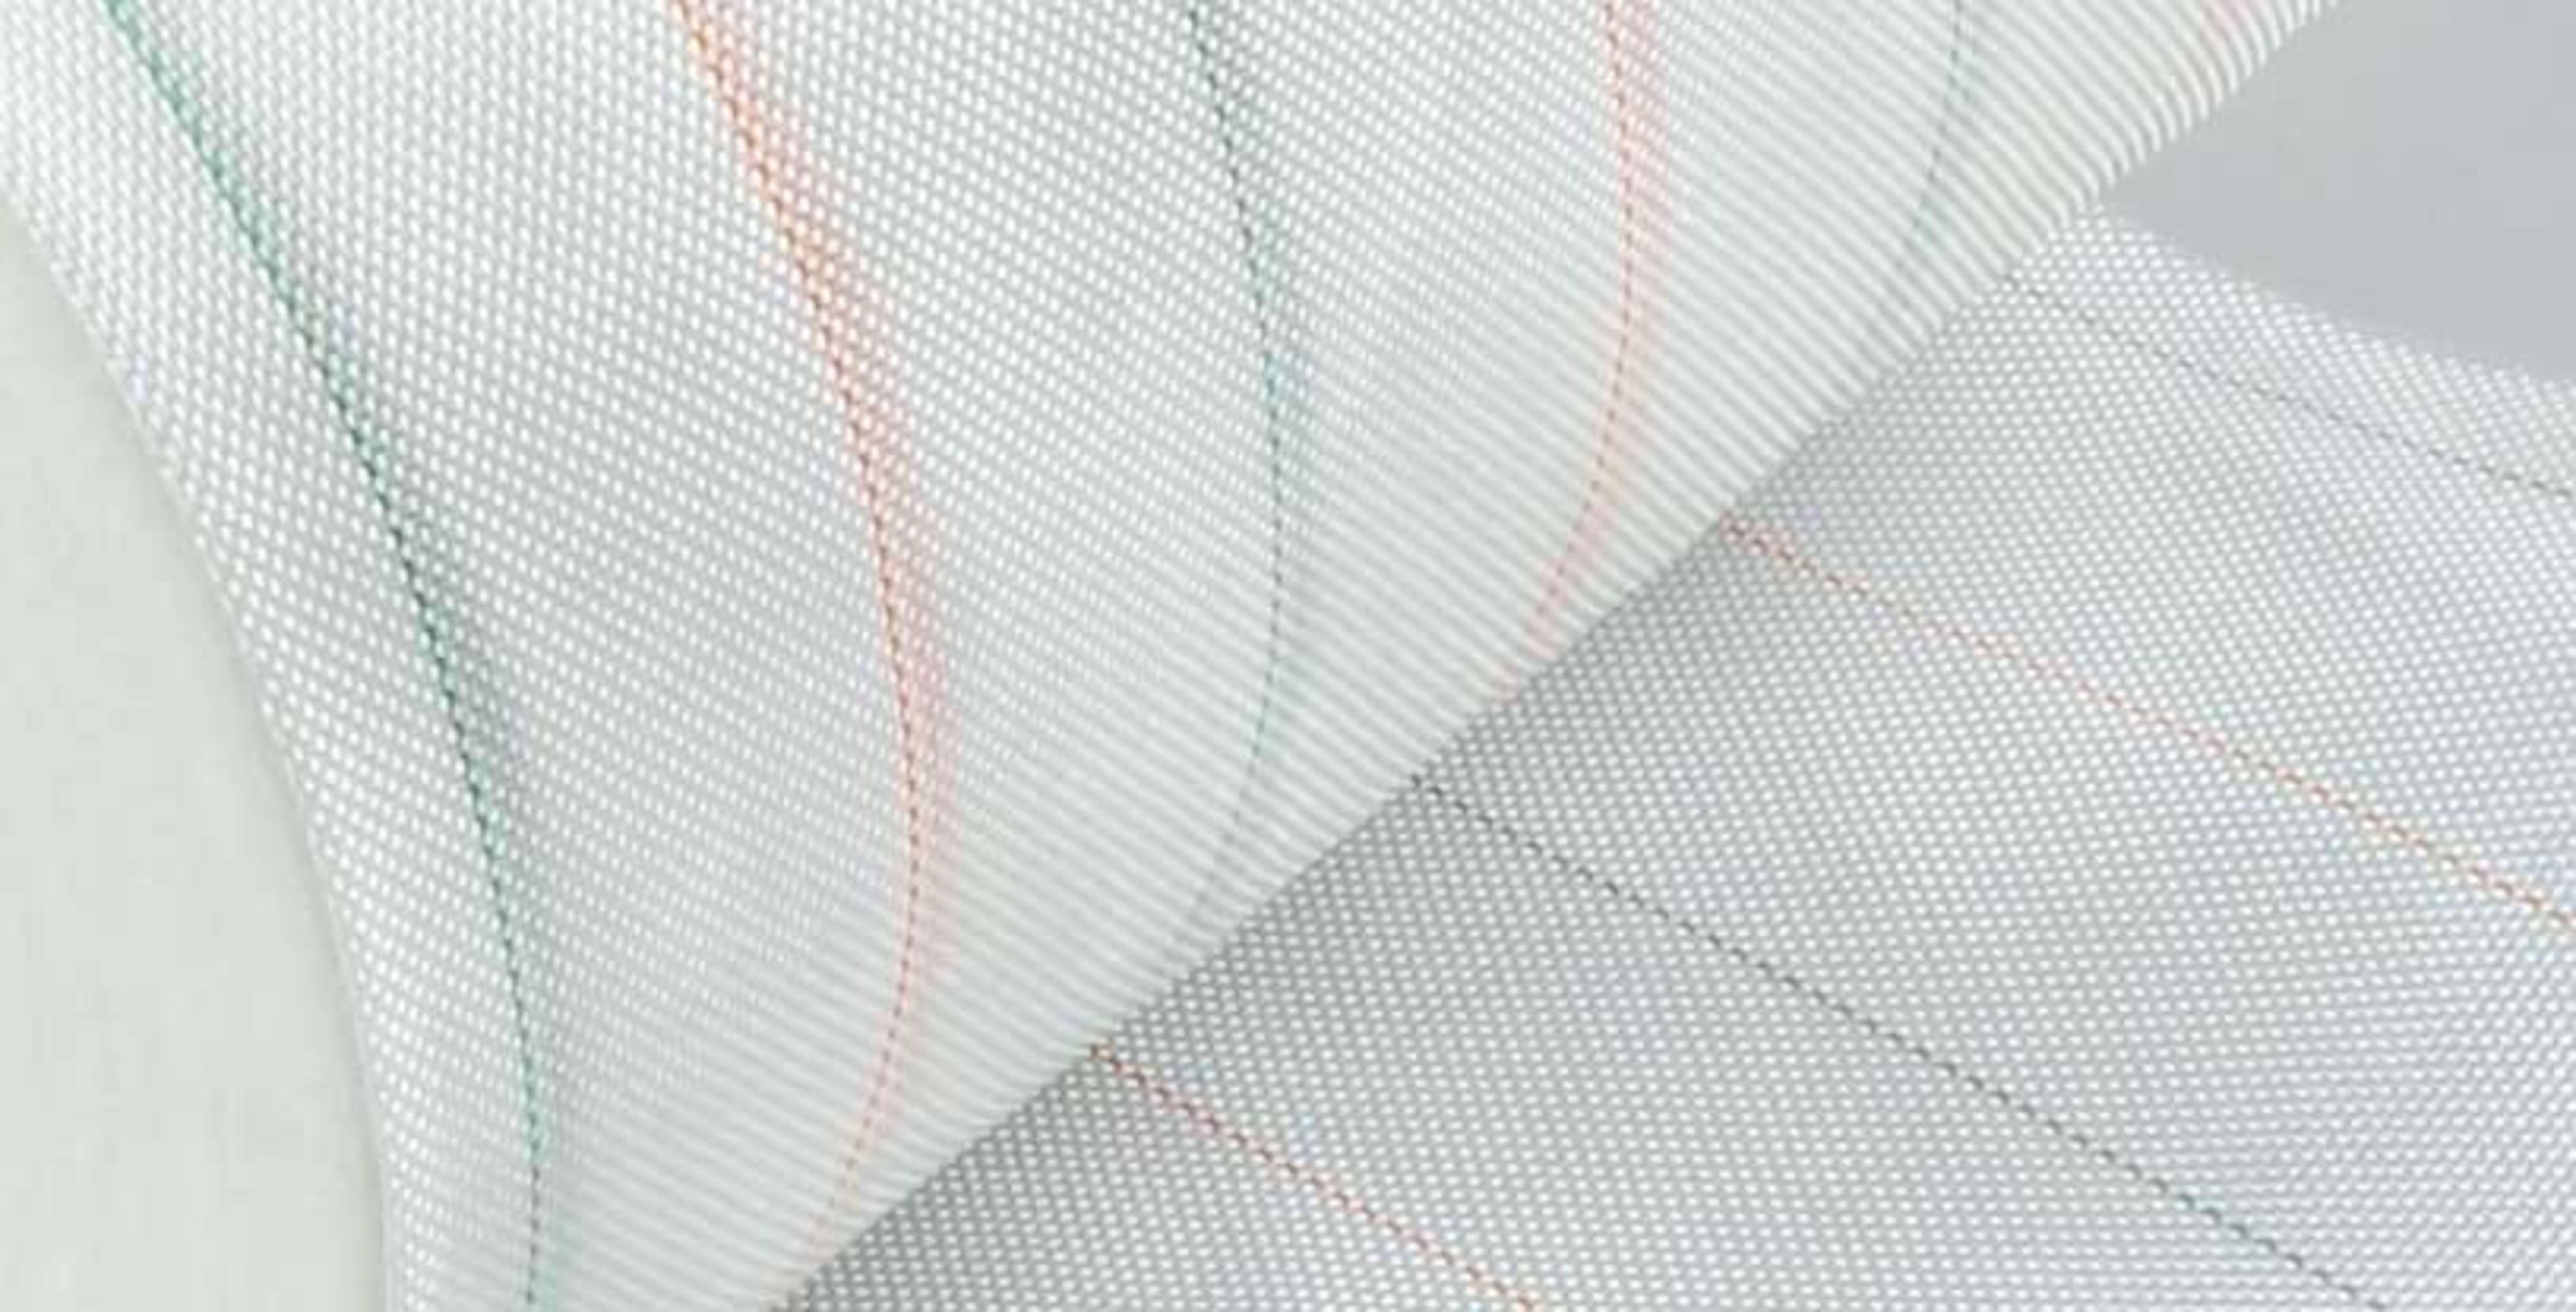 Peel ply PES 90 g/m² (plain weave) 50 cm, image 2